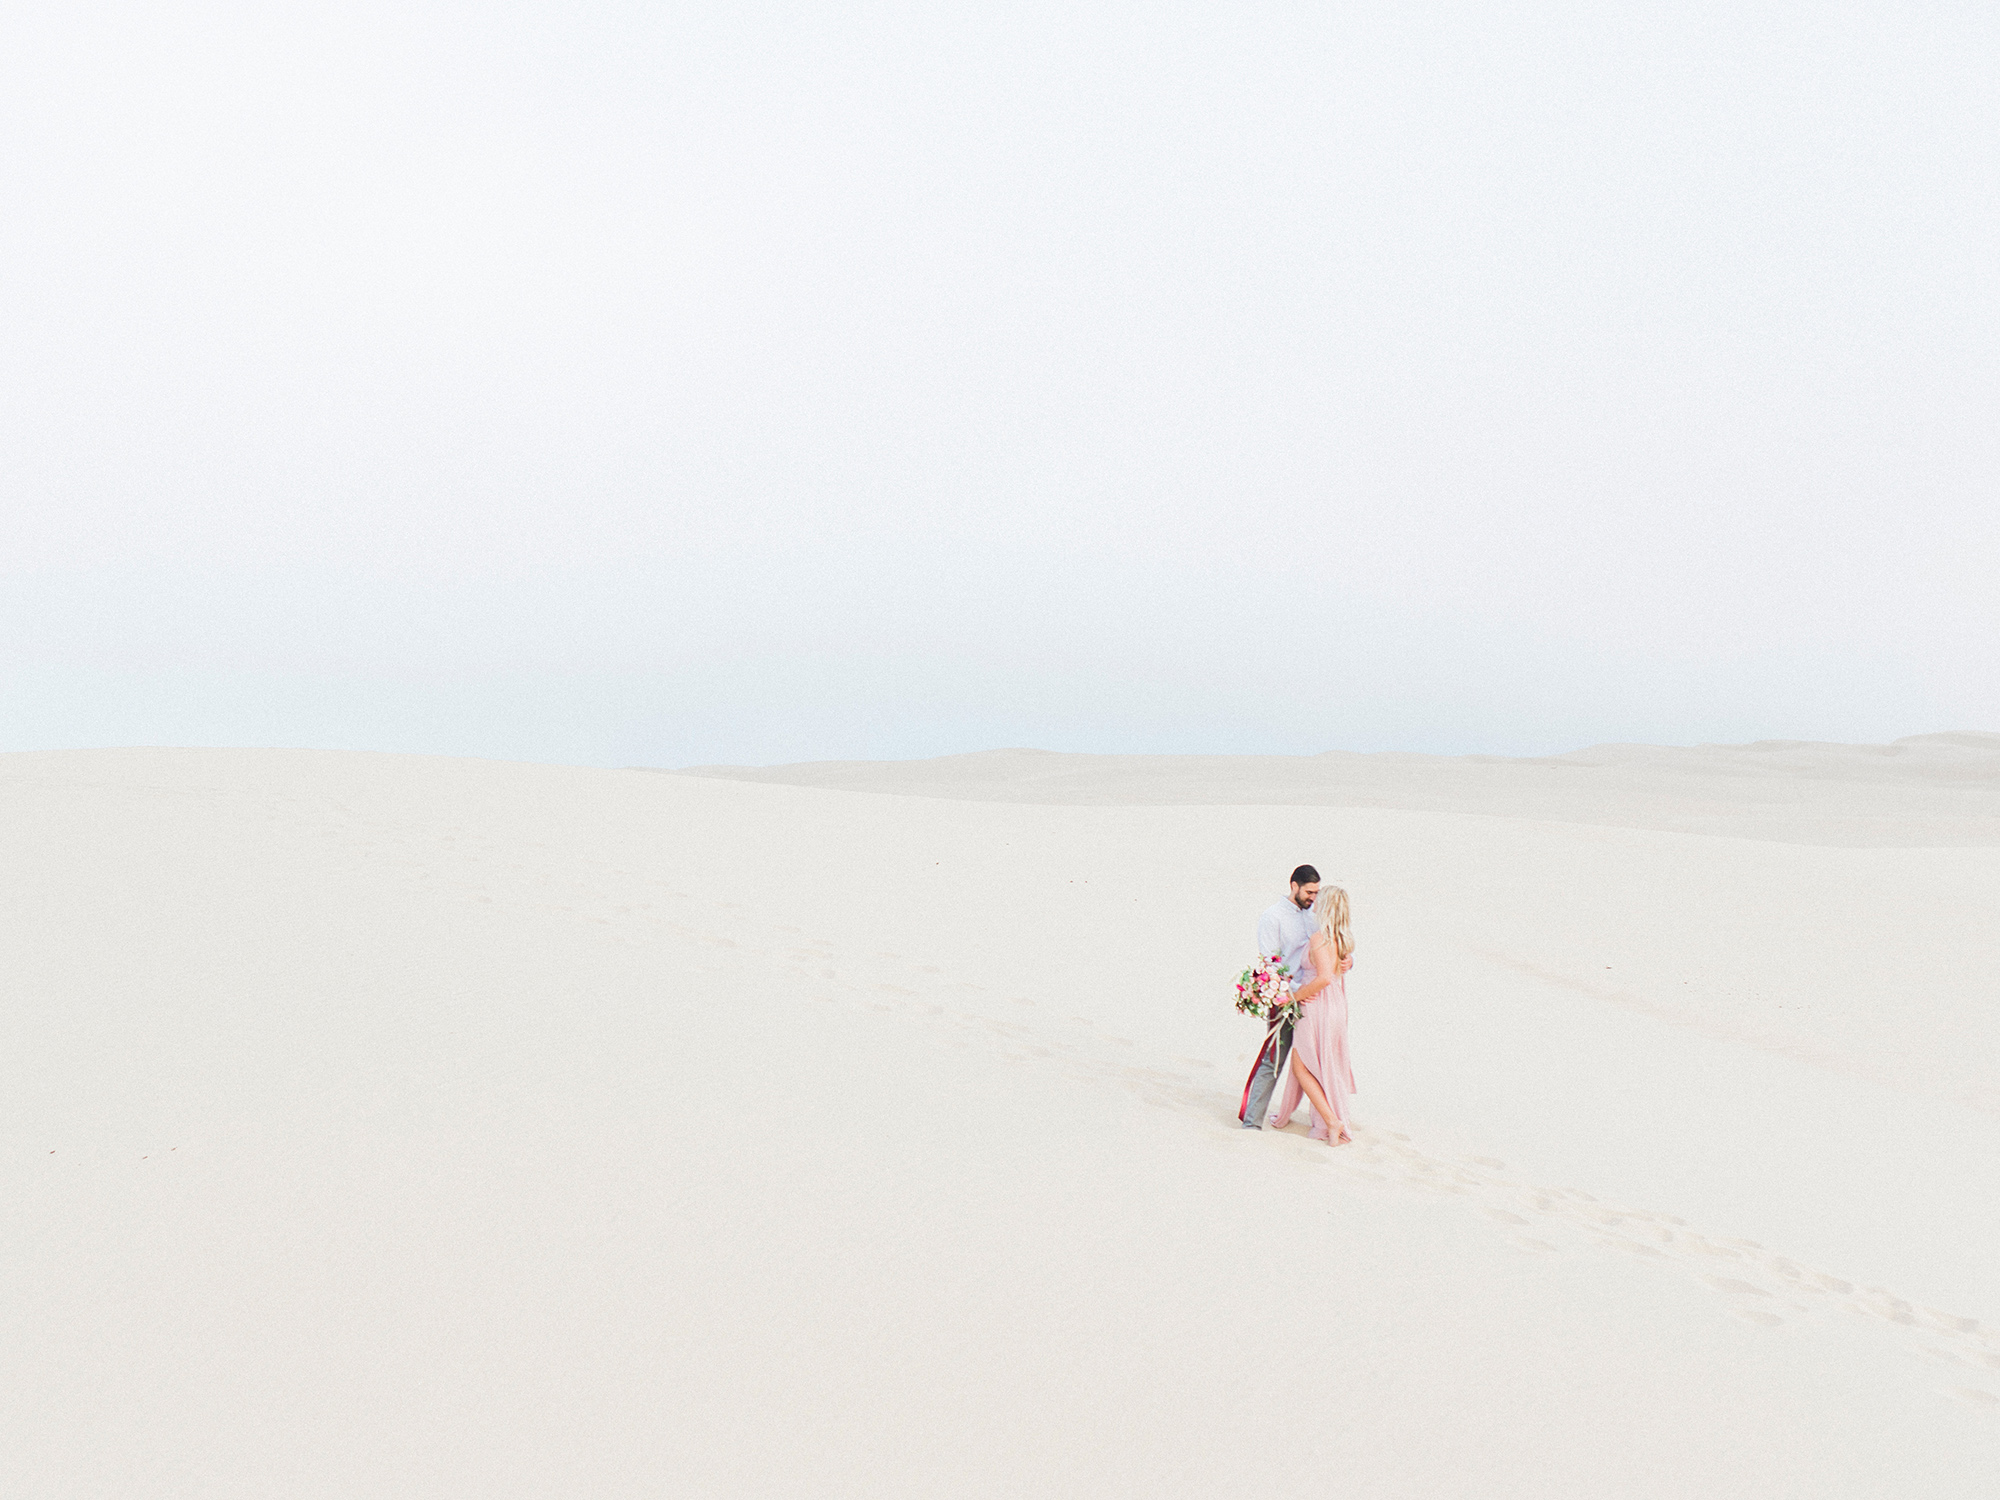 Sand dunes engagement inspiration by Santa Barbara wedding photographer Tenth & Grace.